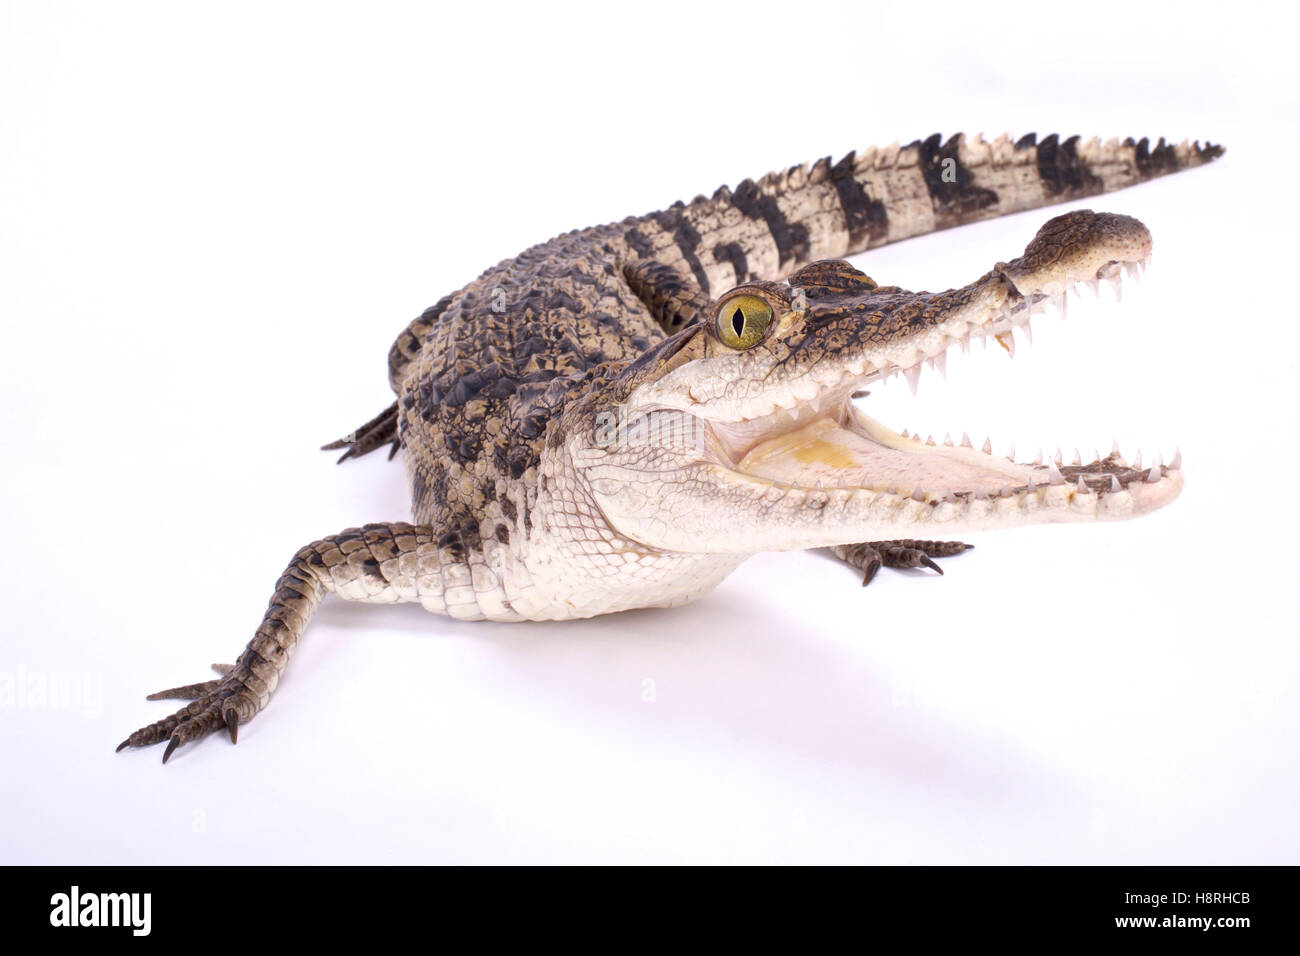 Crocodile Crocodylus mindorensis,Philippine Banque D'Images